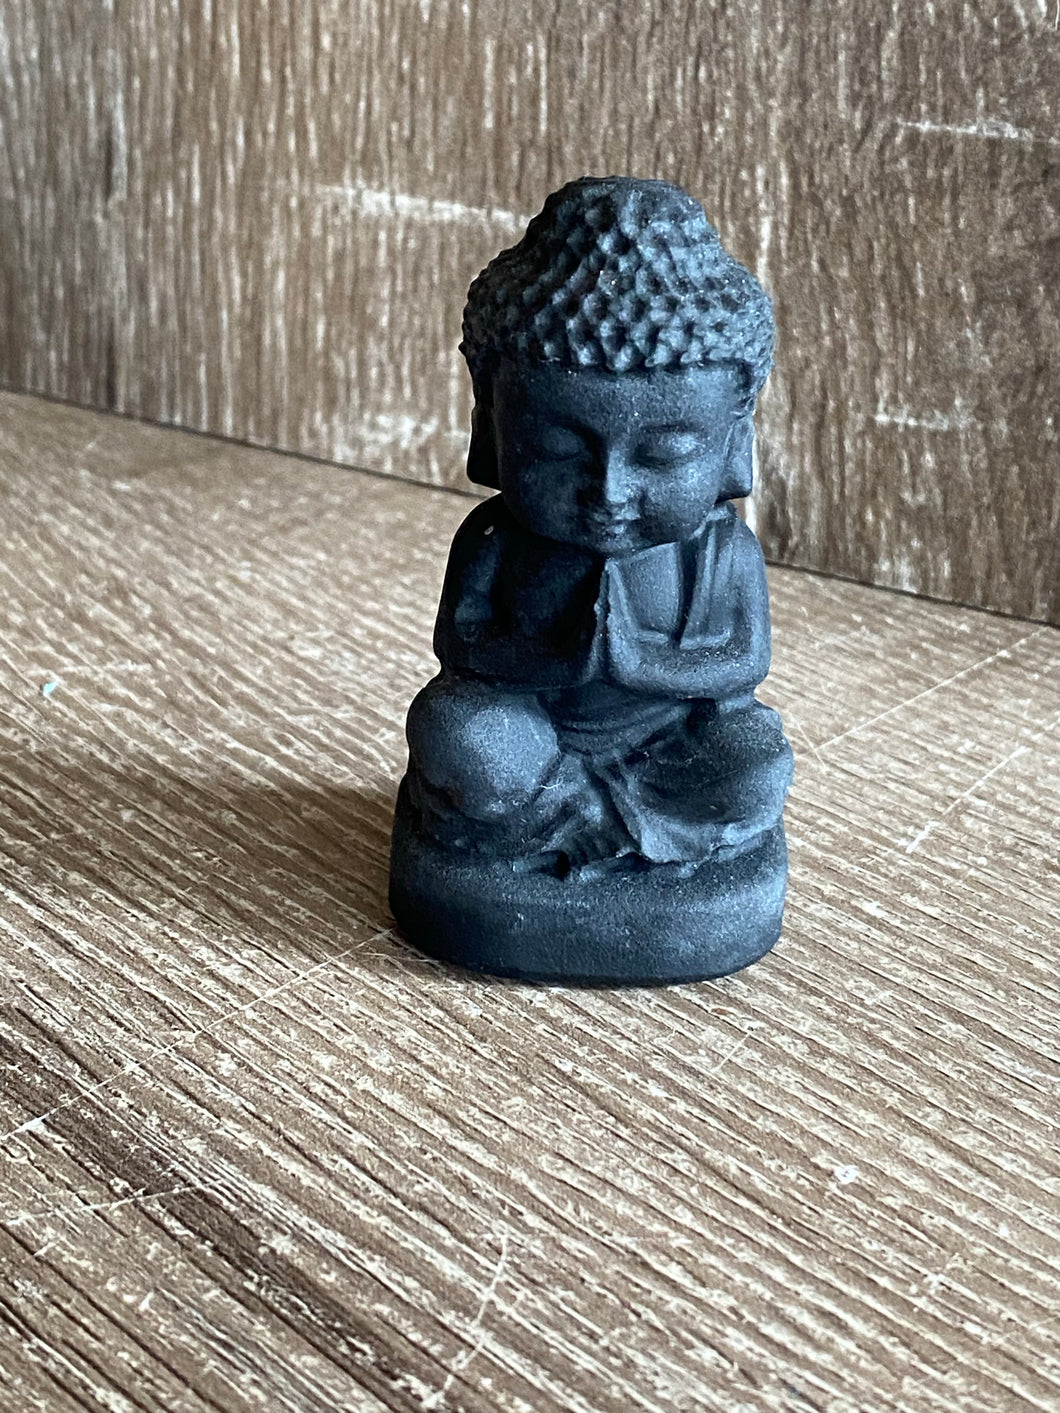 Monk figurine